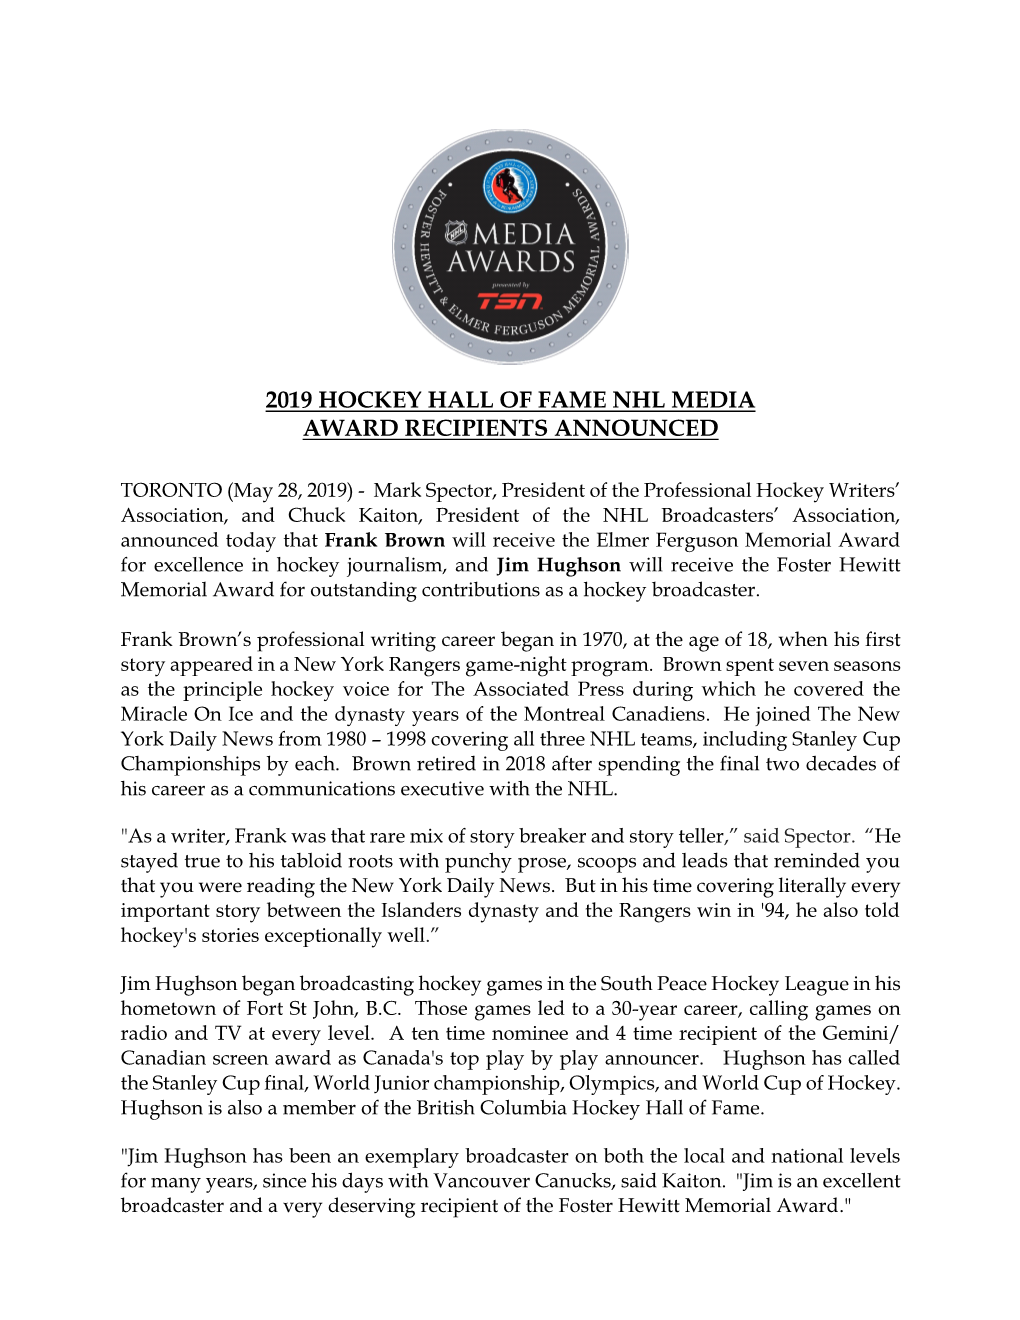 2019 Hockey Hall of Fame Nhl Media Award Recipients Announced